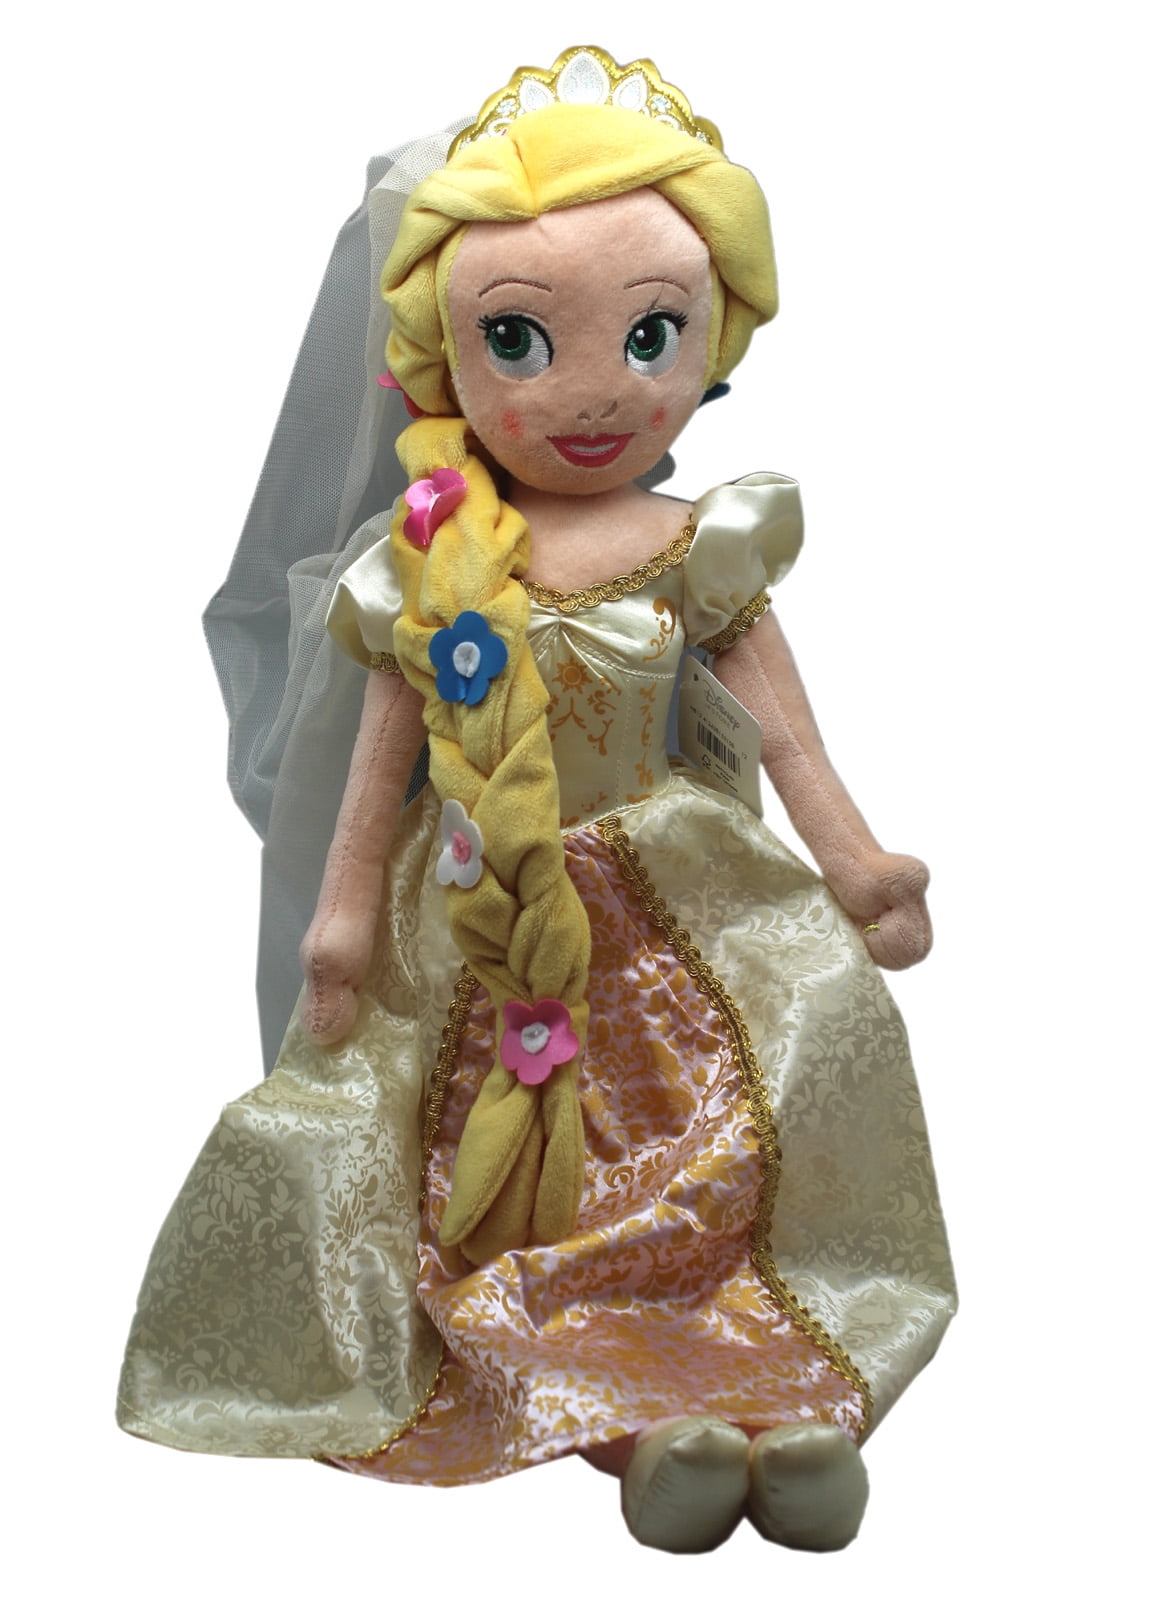 Disney Store exclusive wedding Princess Rapunzel Tangled Soft plush toy  doll A22